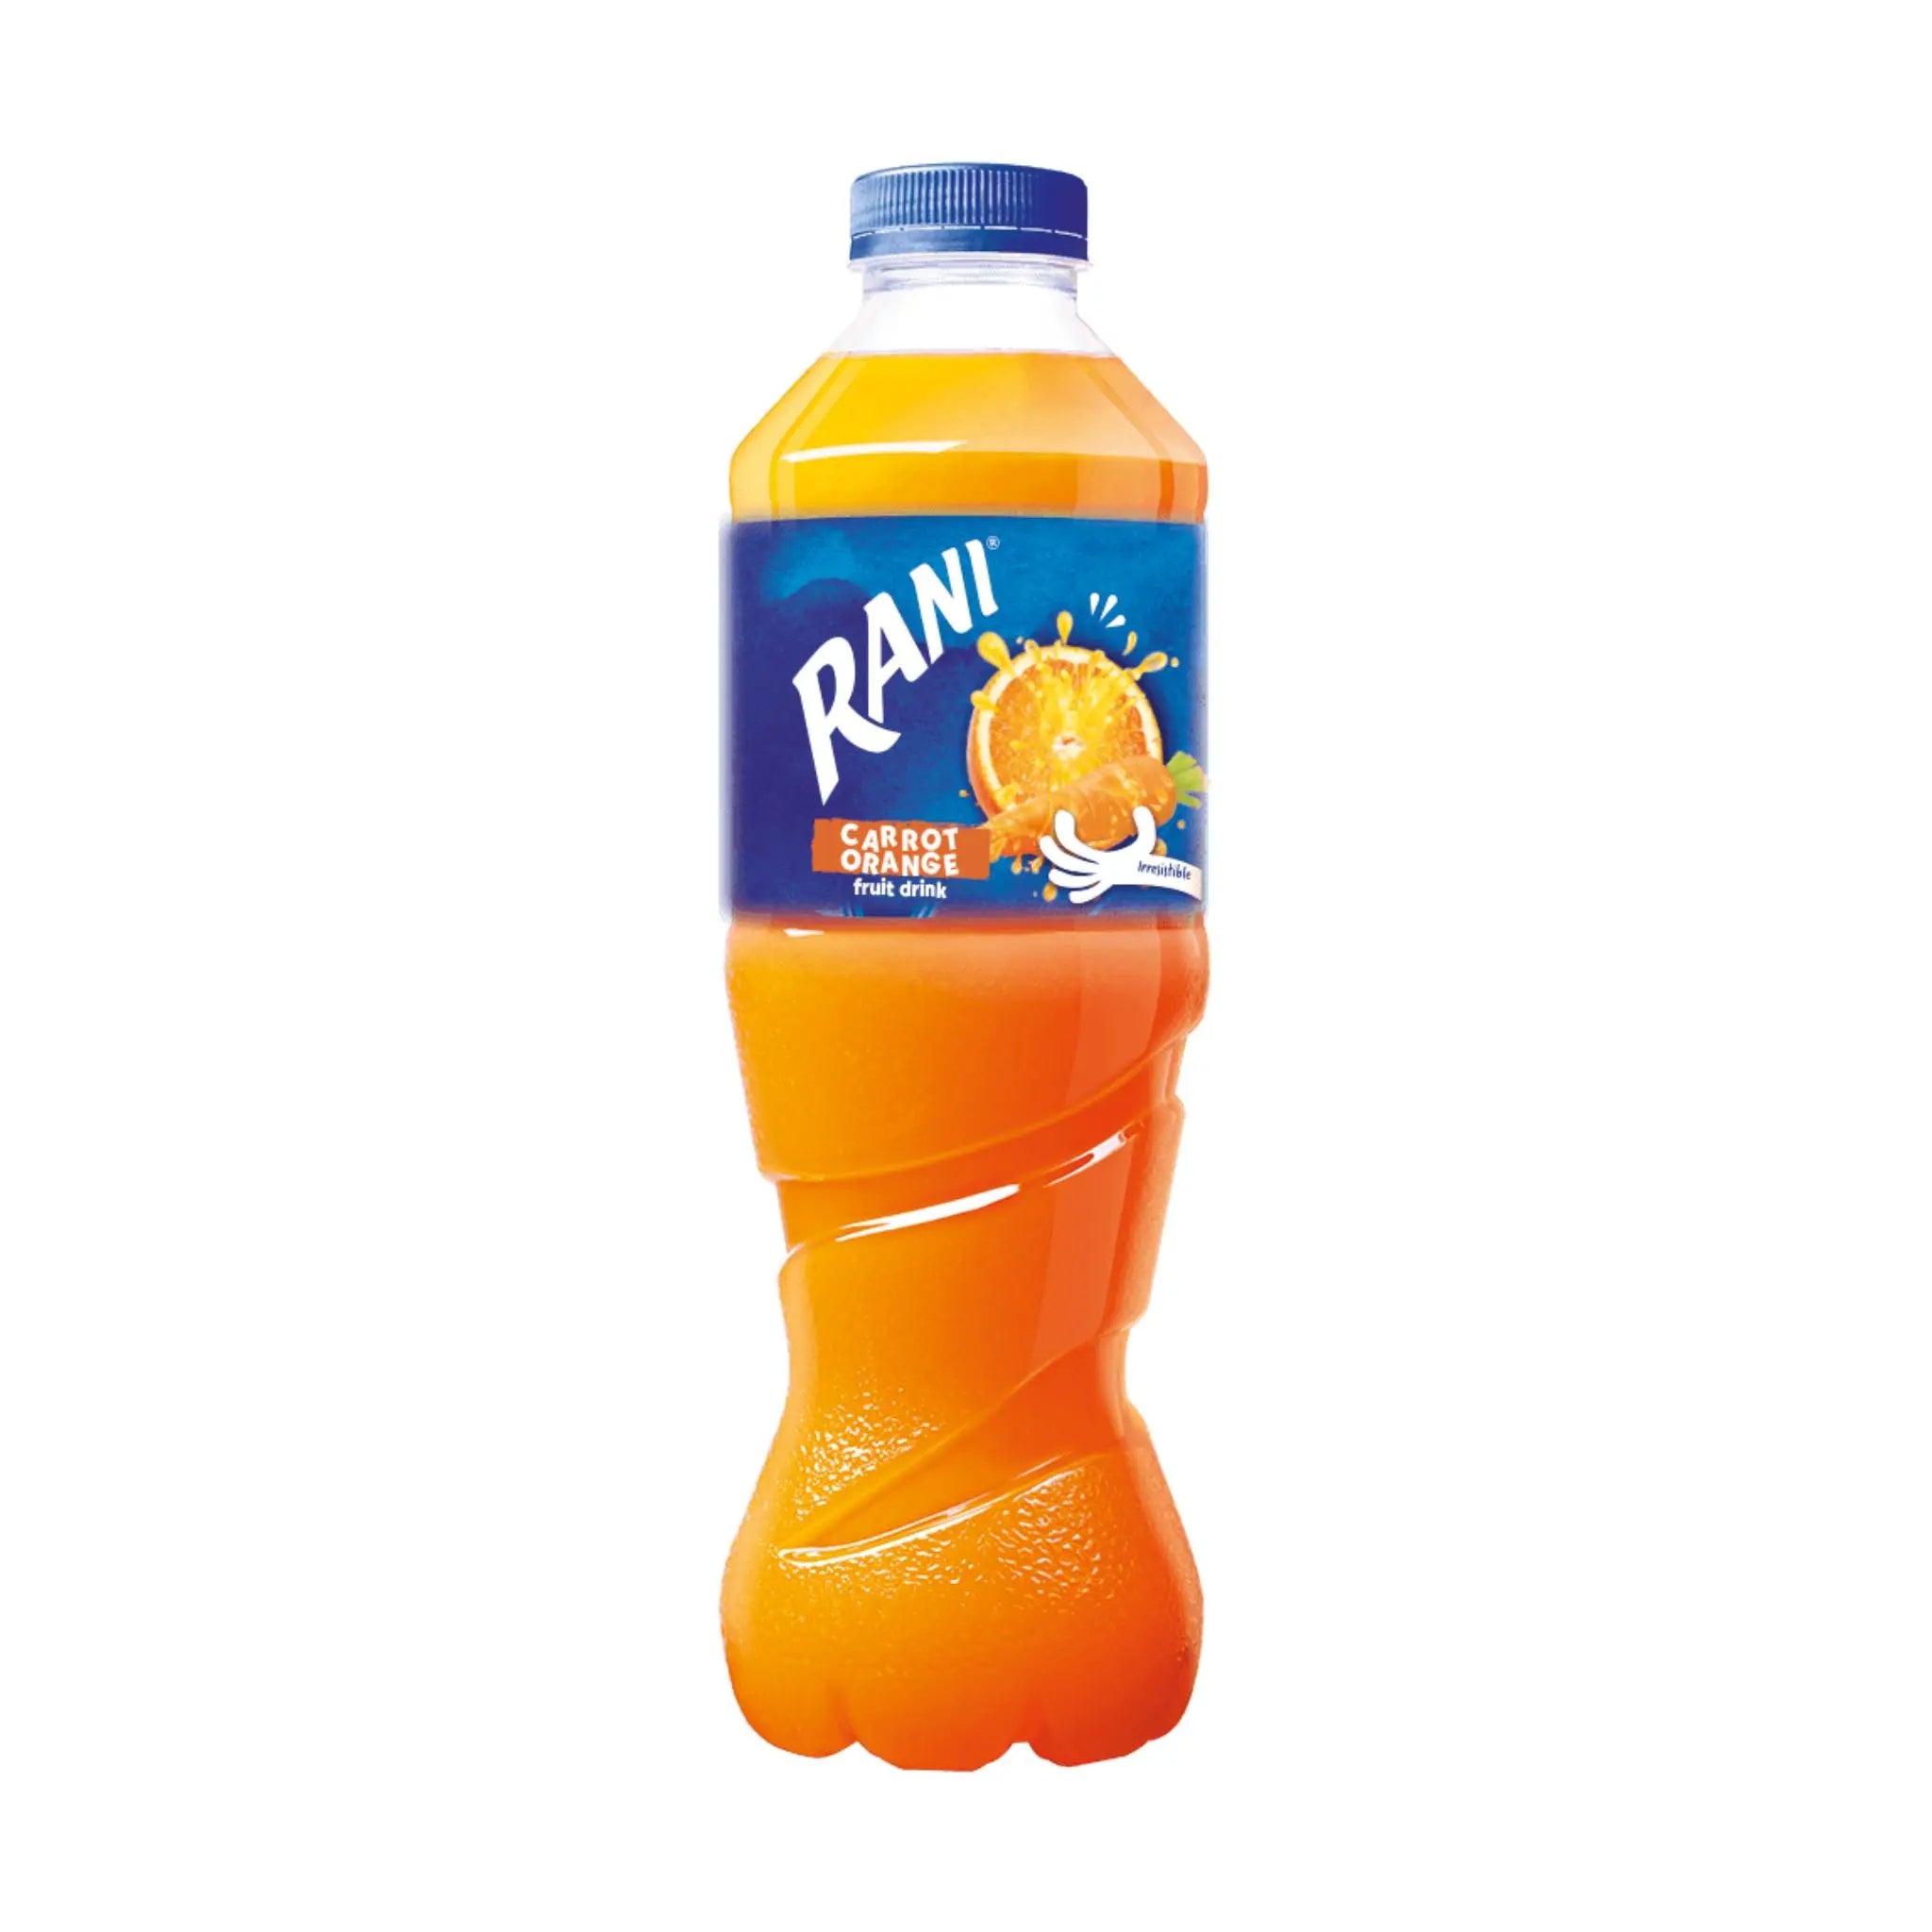 Rani Fruit Drink Carrot & Orange 1.5L PET - 6x1.5L (1 carton) Marino.AE